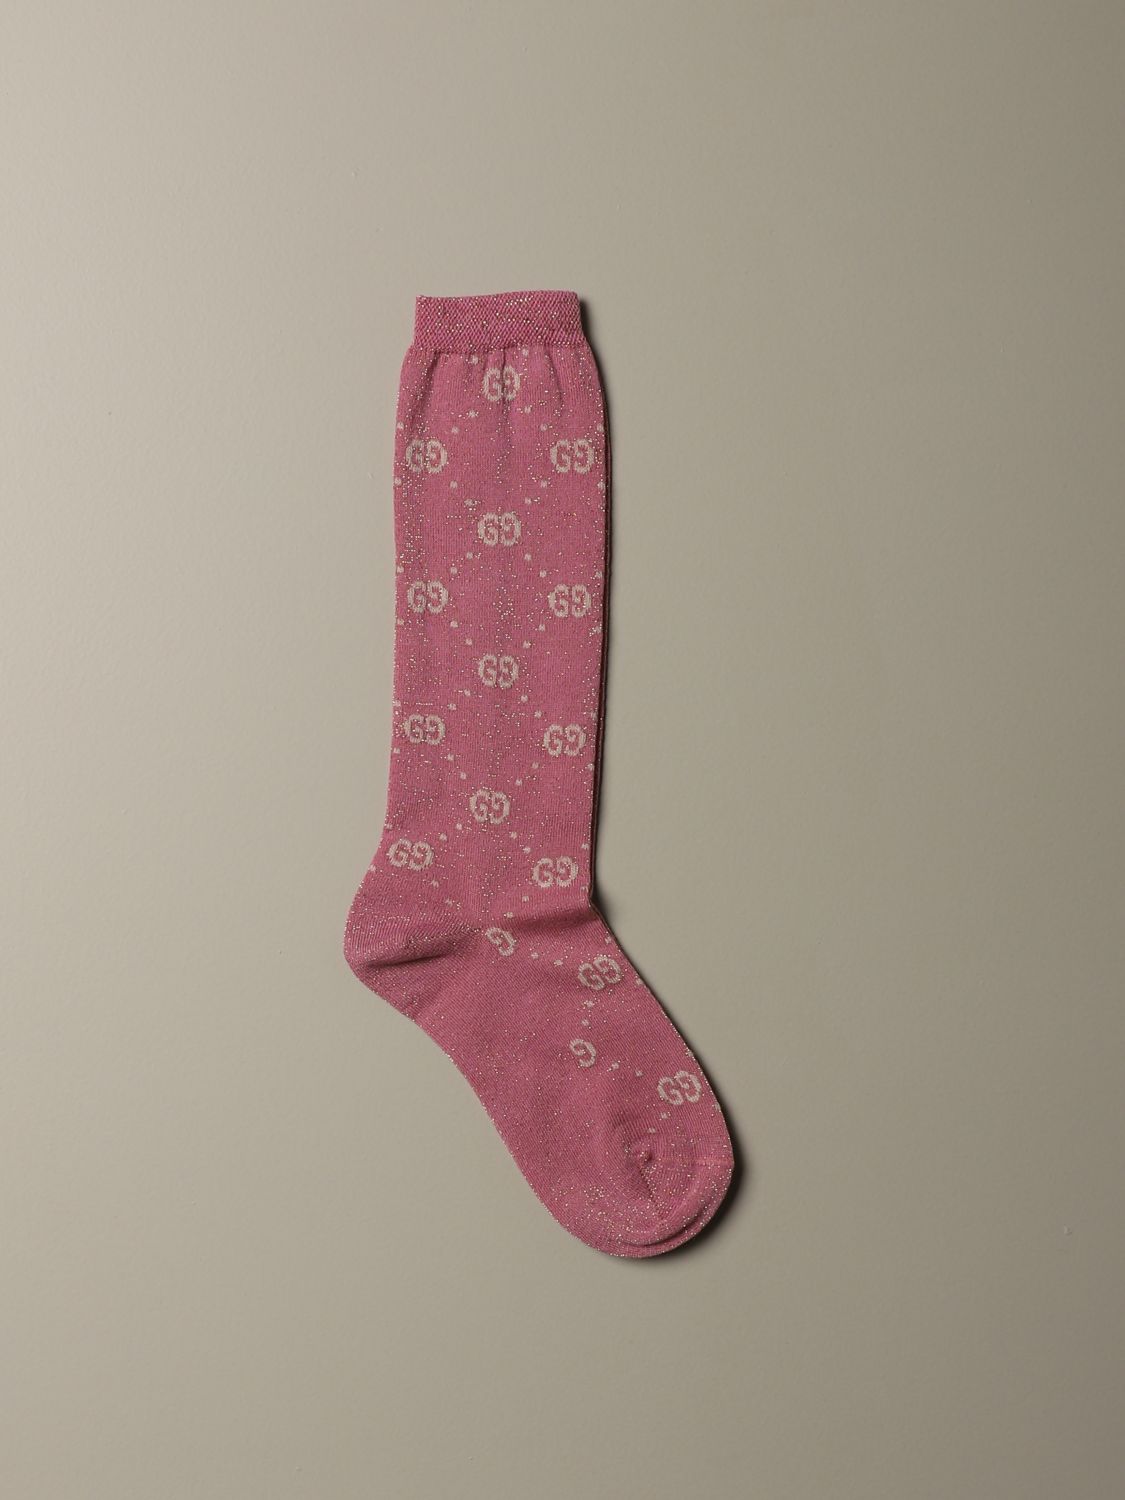 GUCCI: socks in GG lamé cotton - Pink | Gucci girls' socks 480715 4K443  online on 